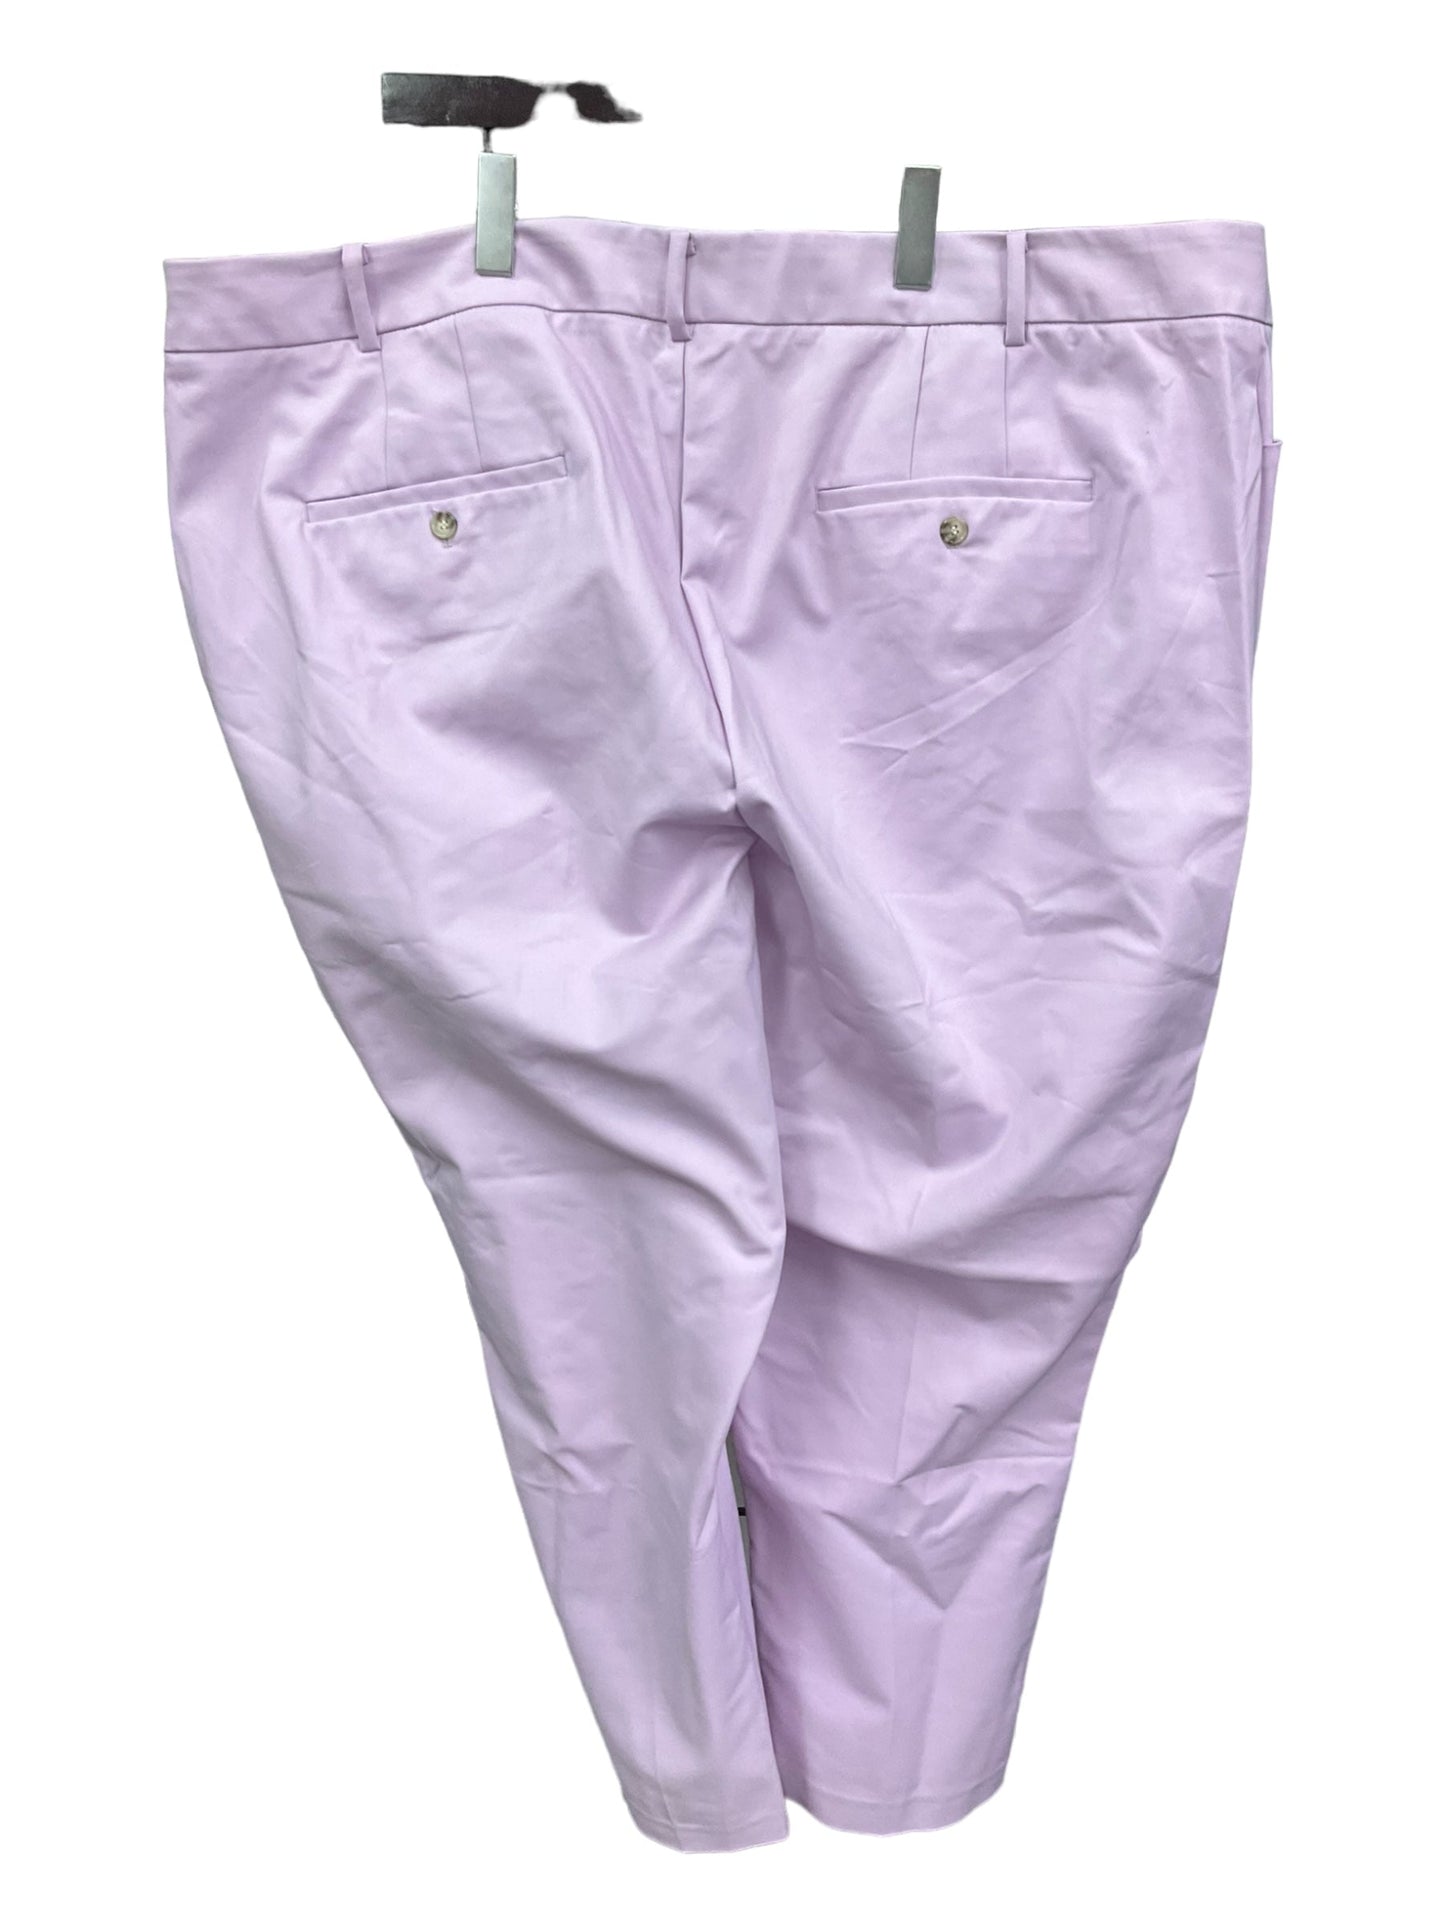 Pants Work/dress By Eloquii  Size: 4x